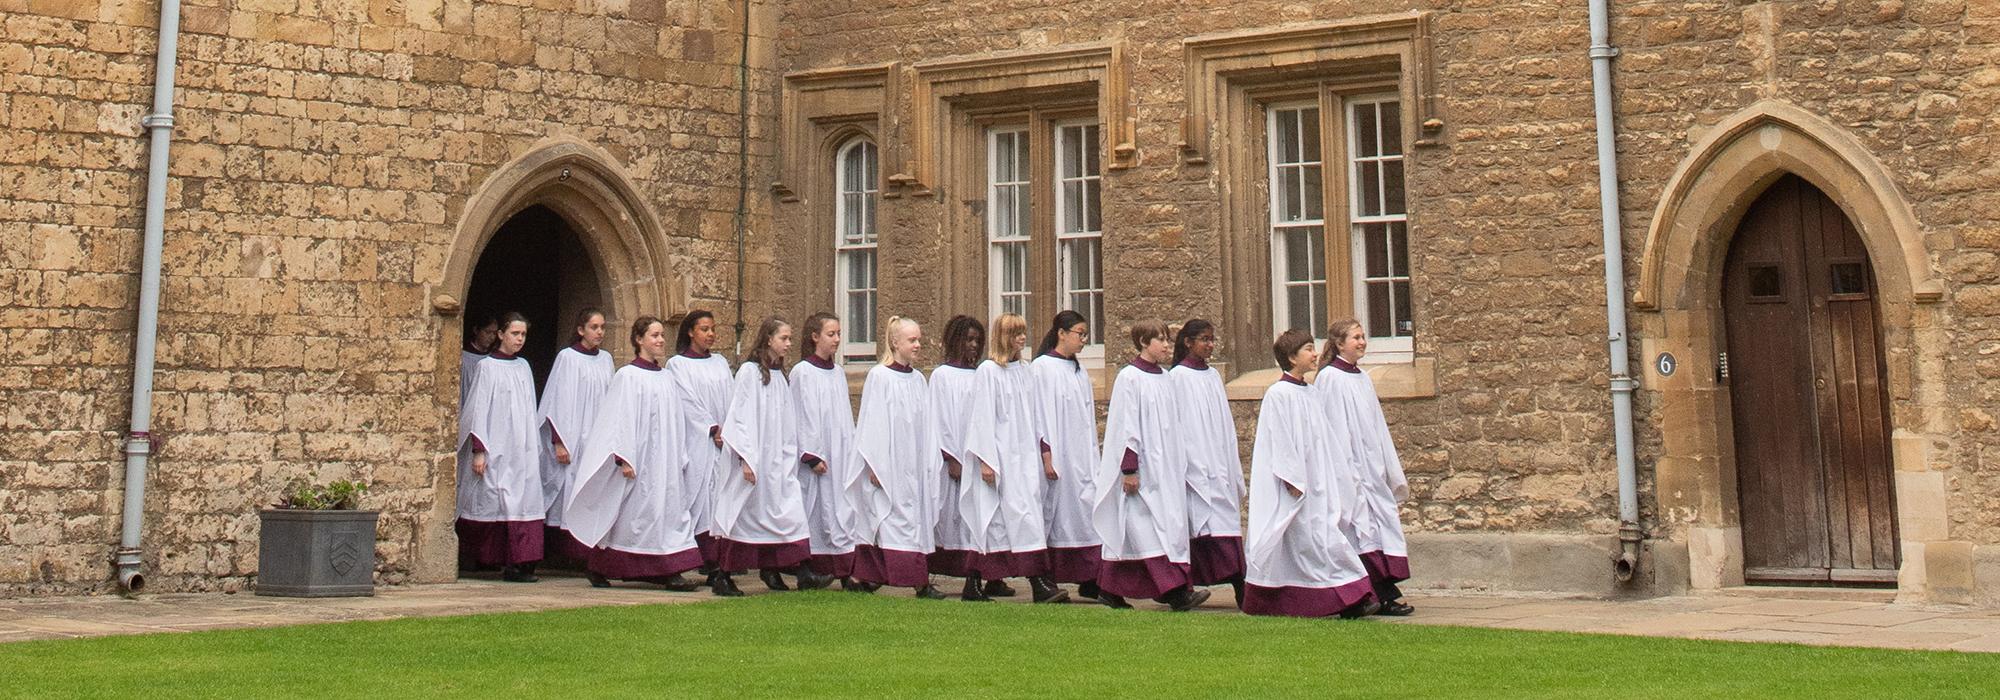 Members of the Merton College Girls' Choir in 2019 - Photo: © John Cairns